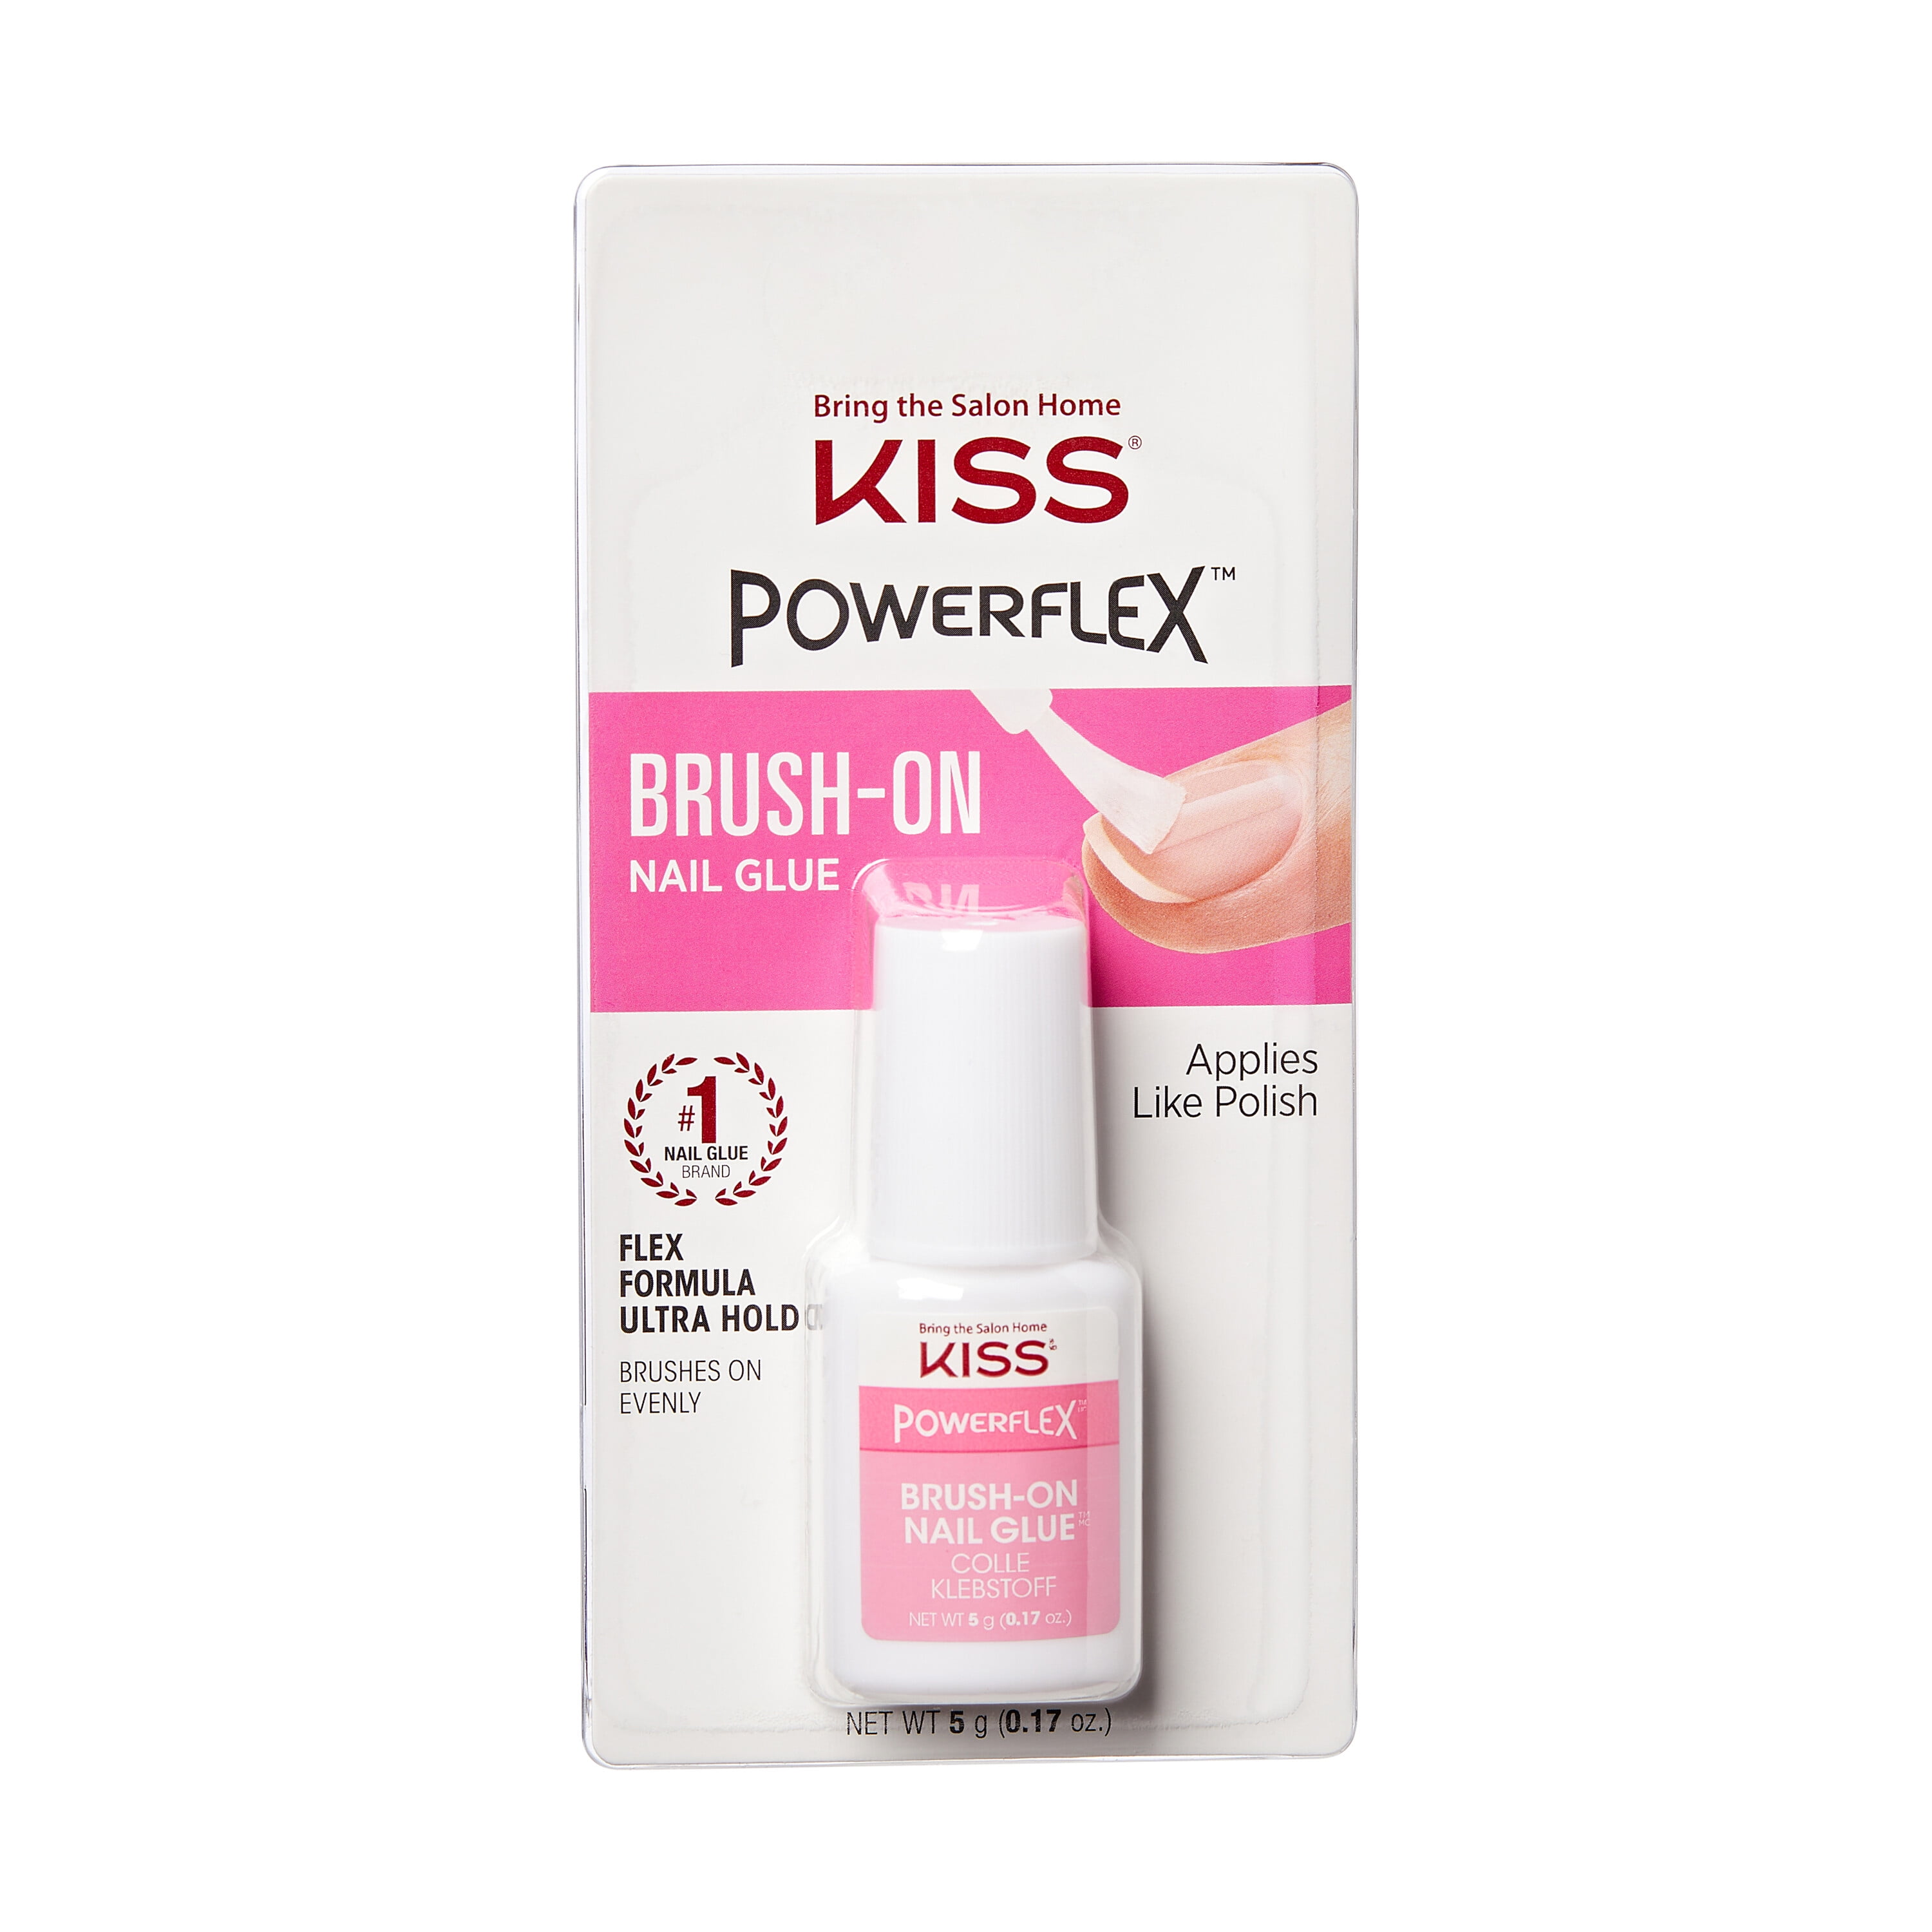 KISS PowerFlex Brush-On Nail Glue, Ultra Hold Flex Formula, 5g (0.17 oz.) –  KISS USA